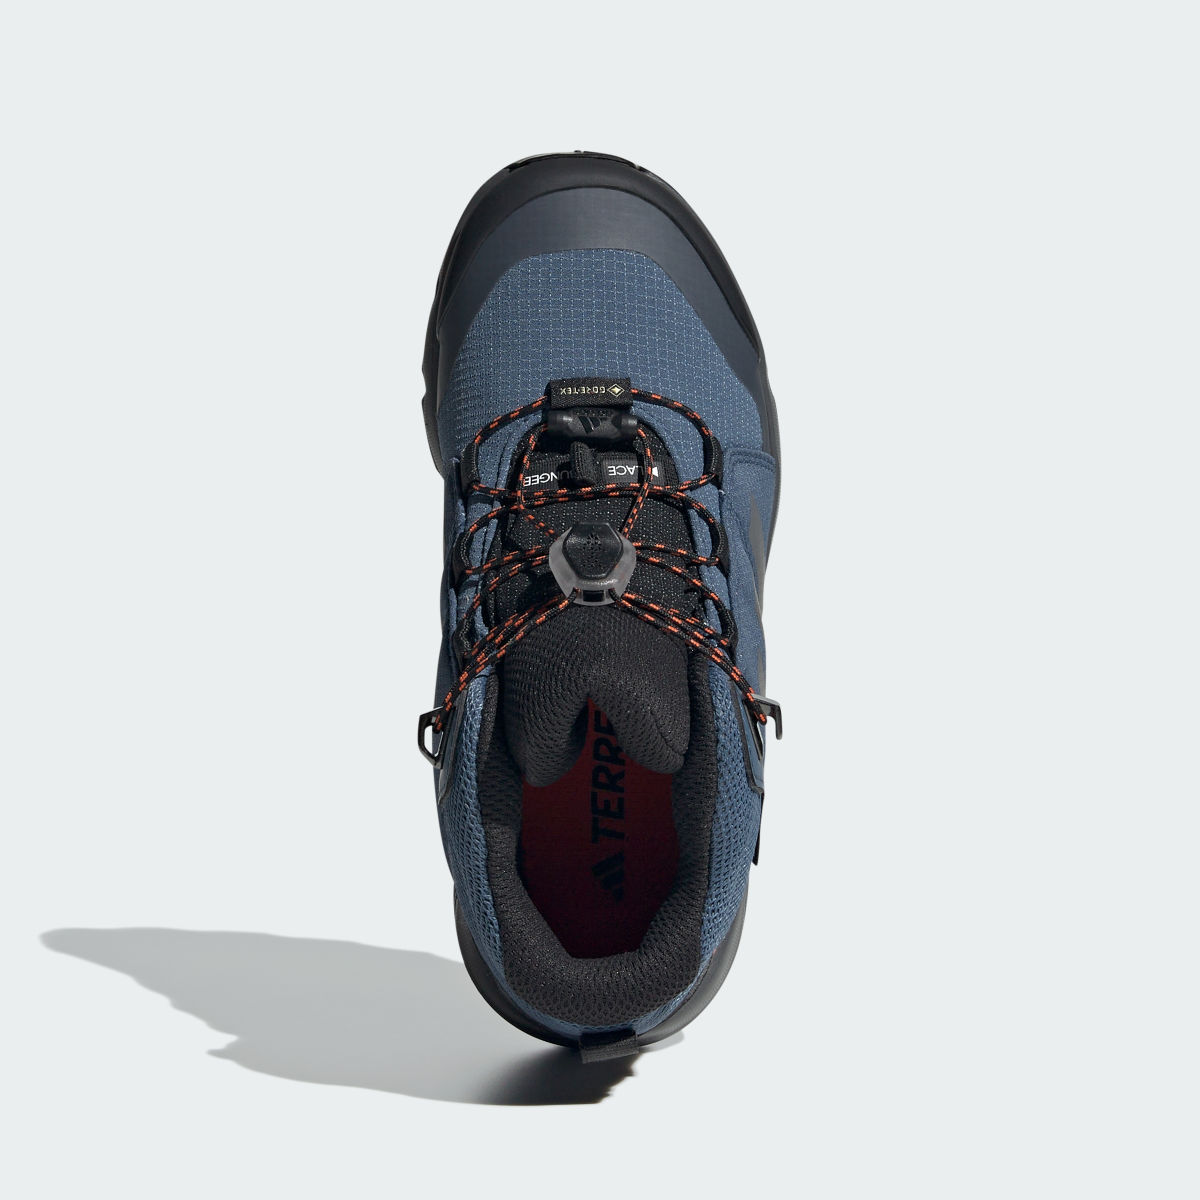 Adidas Chaussure de randonnée Organizer Mid GORE-TEX. 4